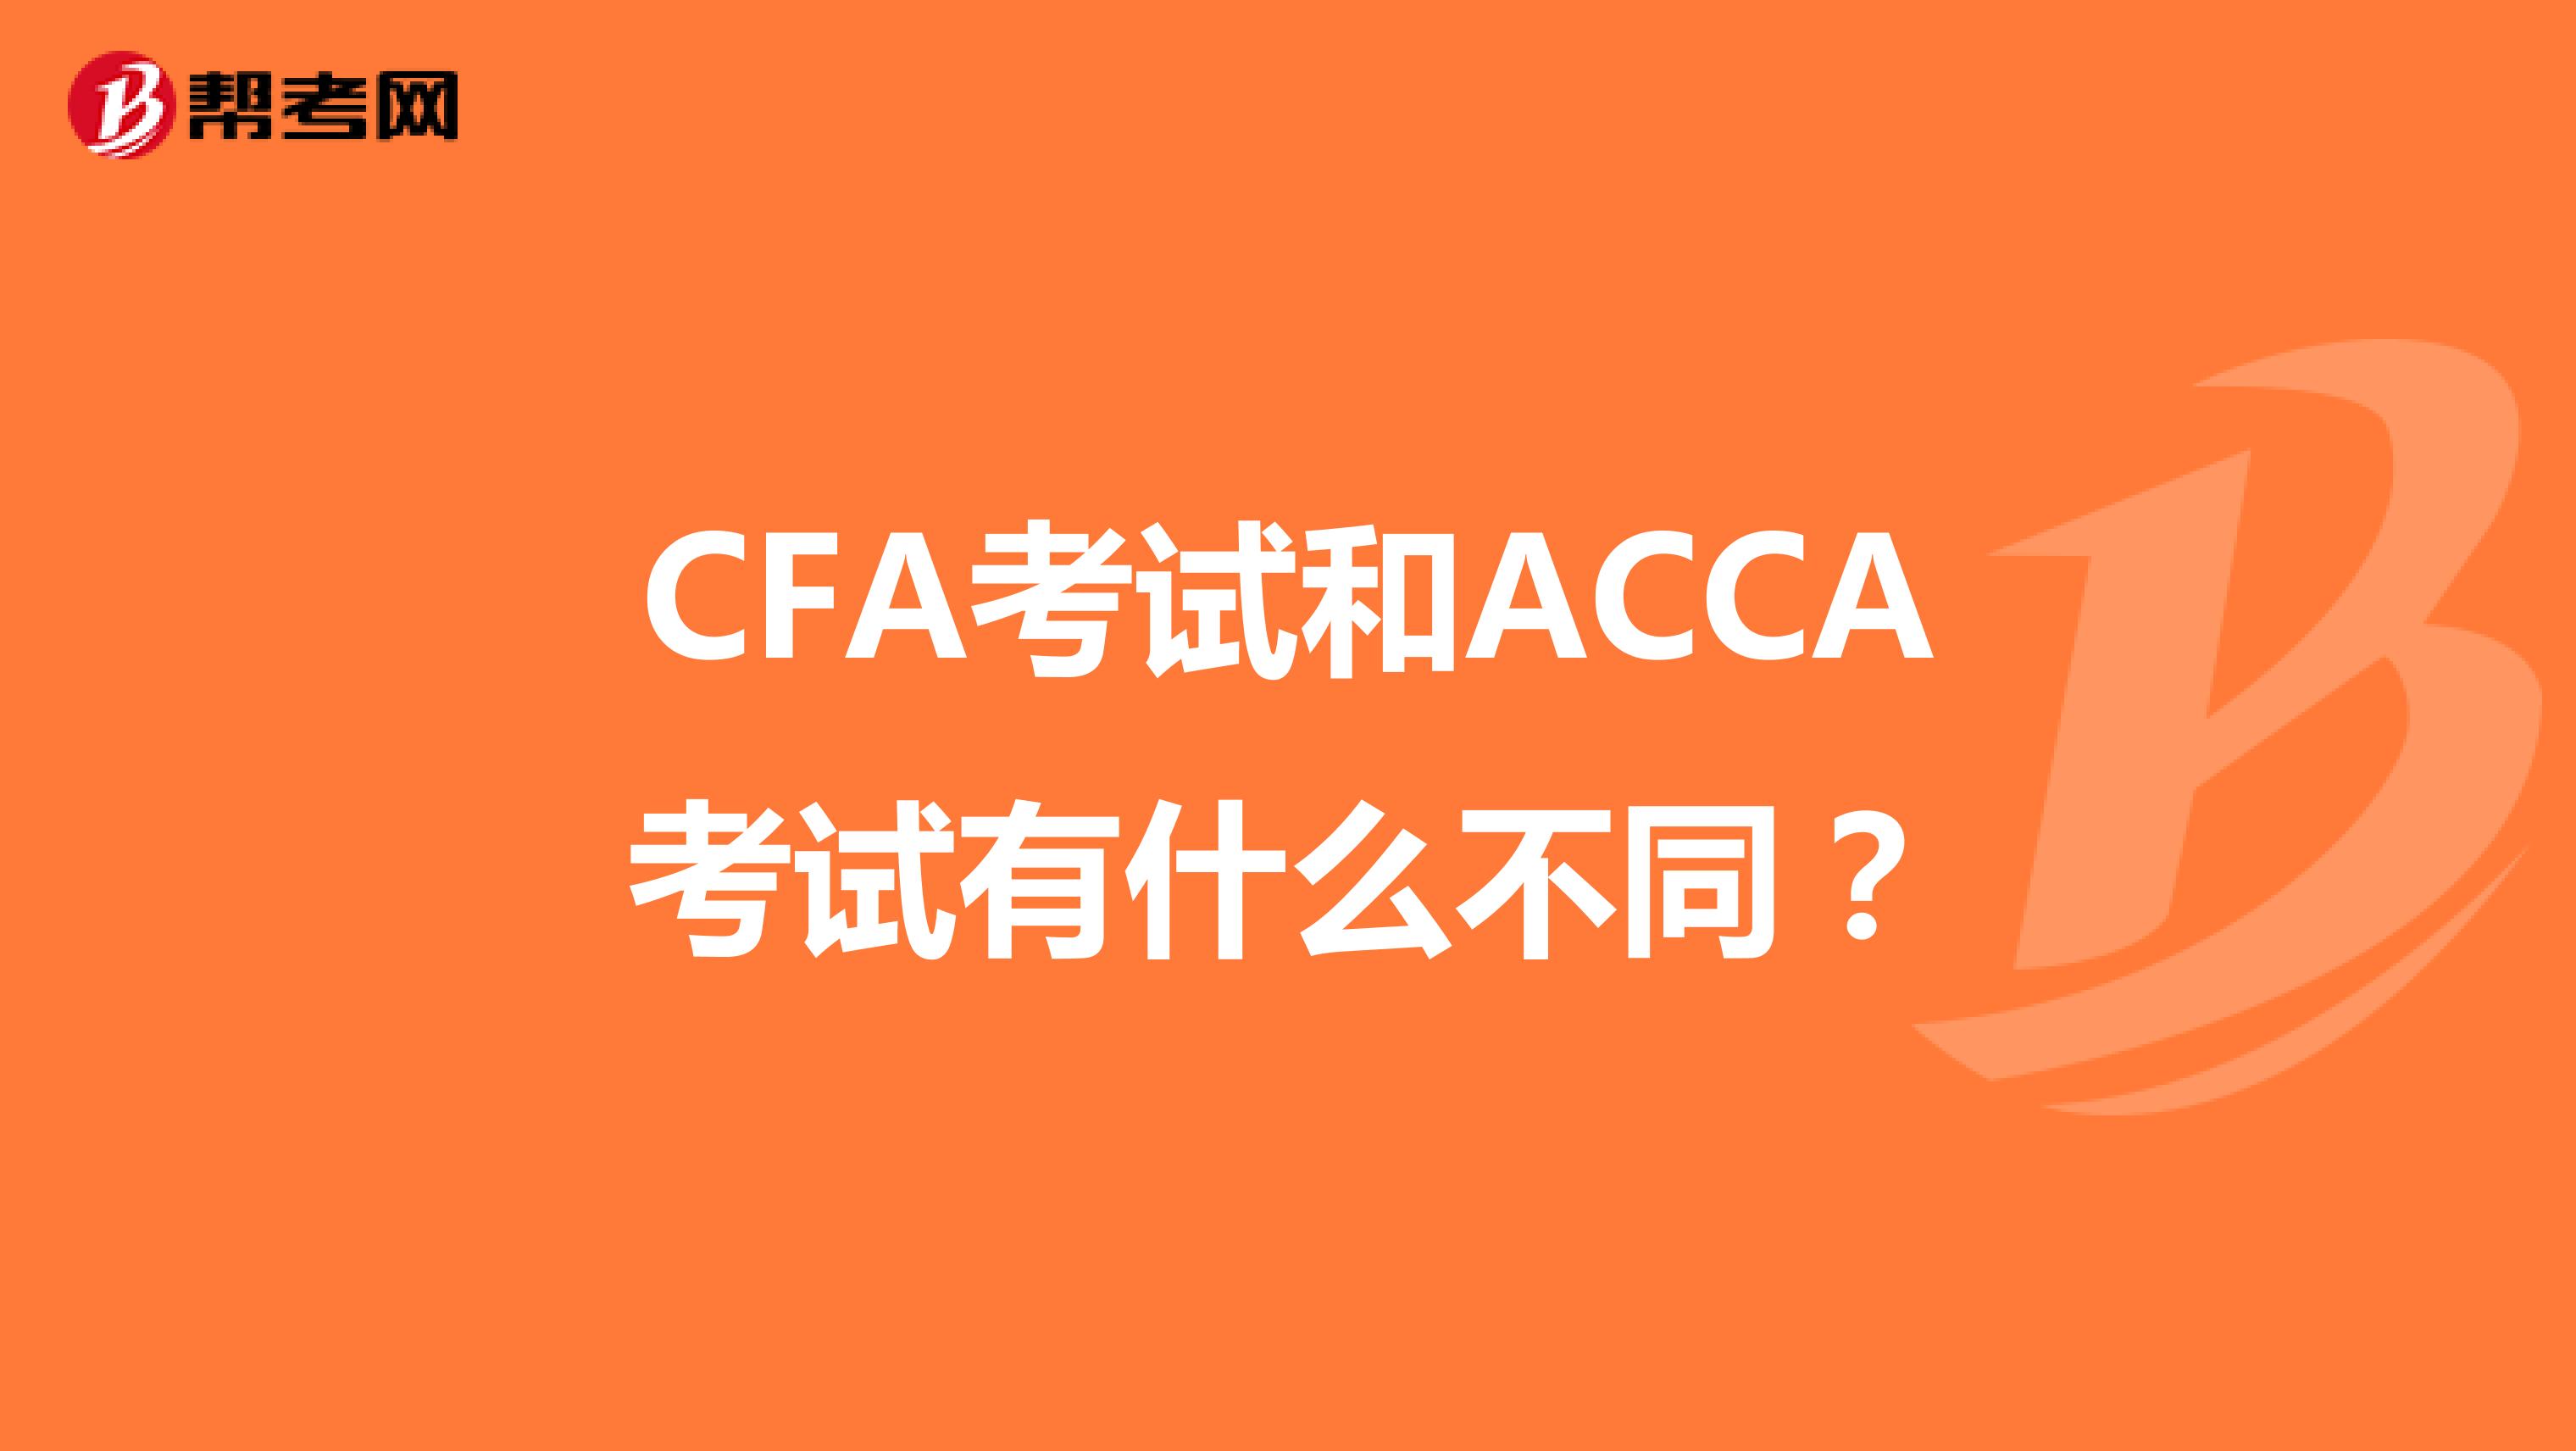 CFA考试和ACCA考试有什么不同？